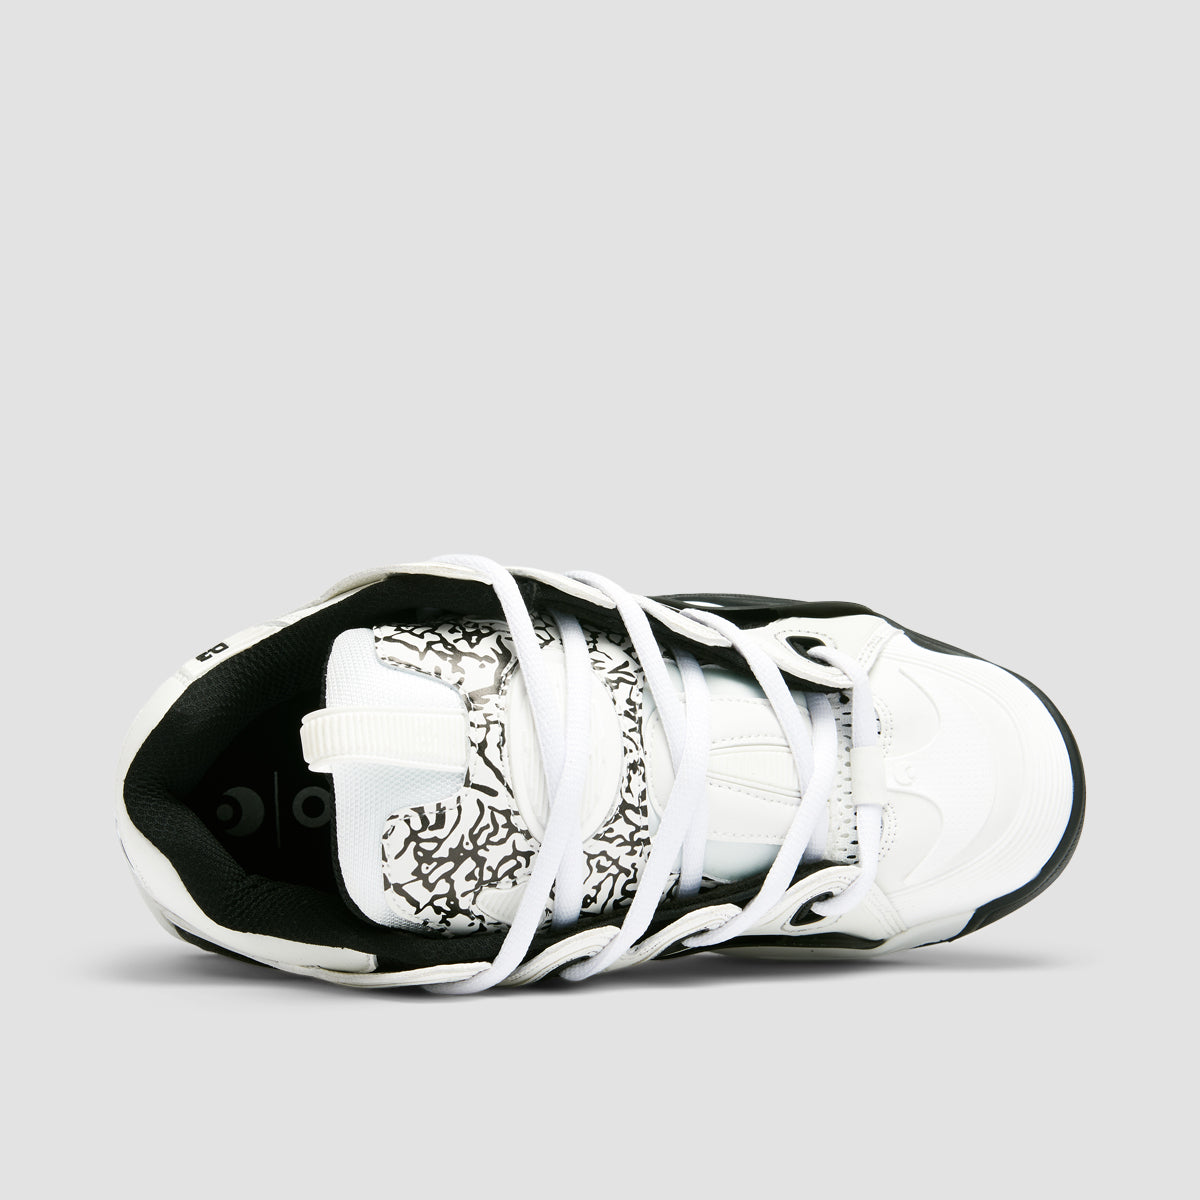 Osiris D3 2001 Shoes - Black/White/Crack